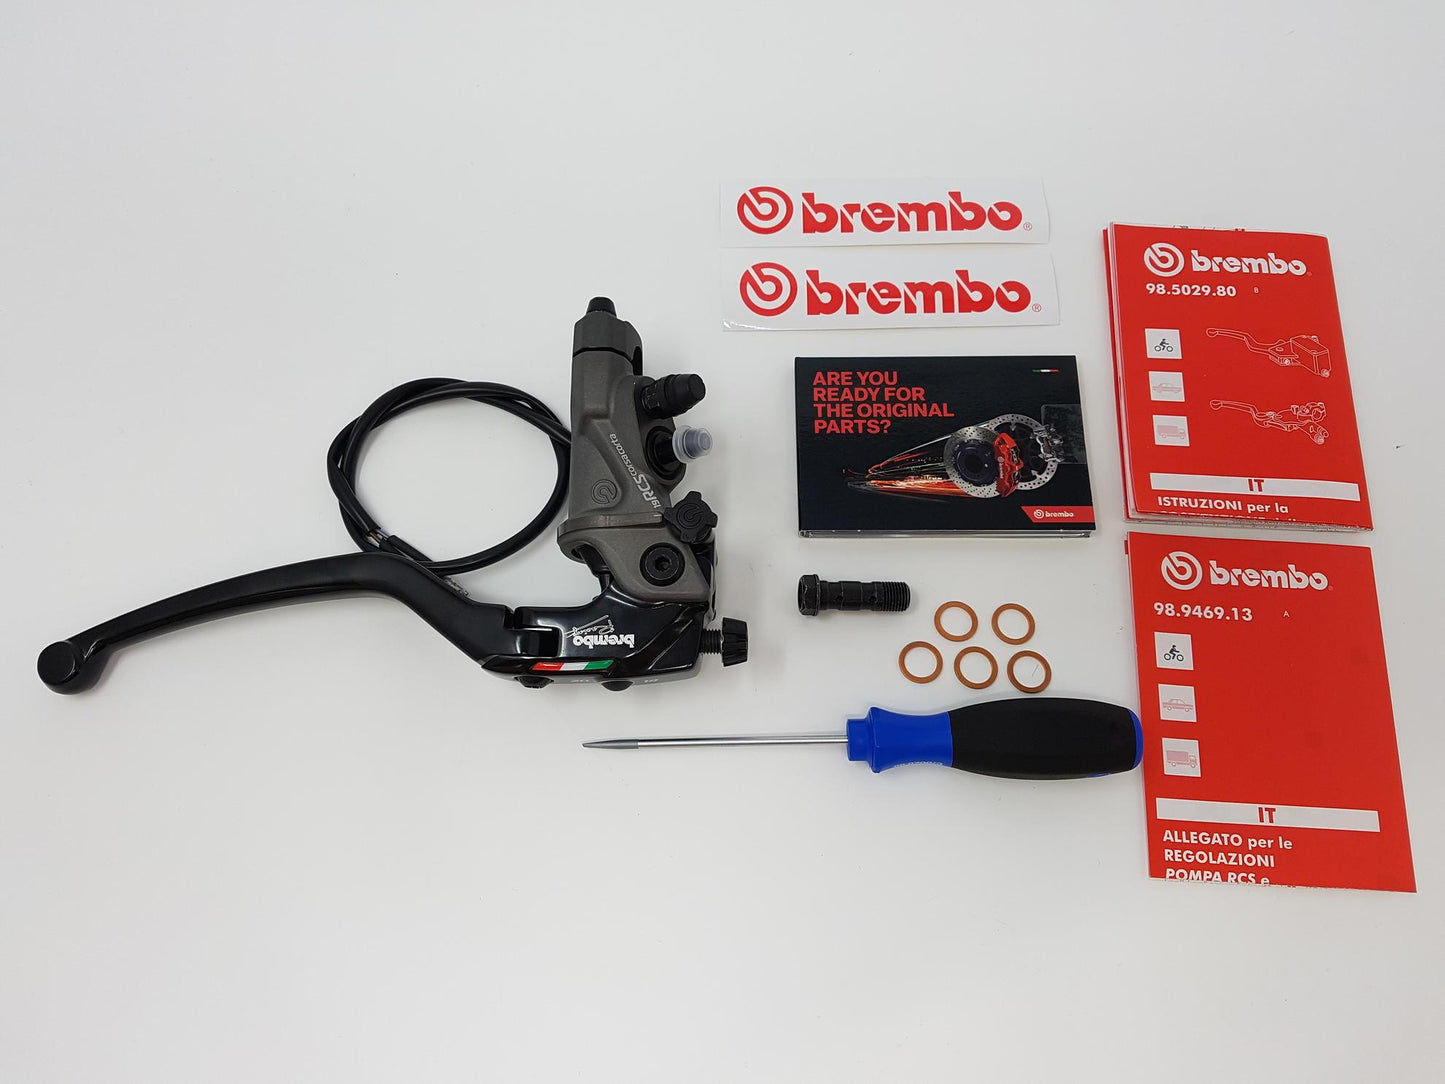 BREMBO Radial Brake Master Cylinder 19RCS "Corsa Corta" (18-20 mm ratio)